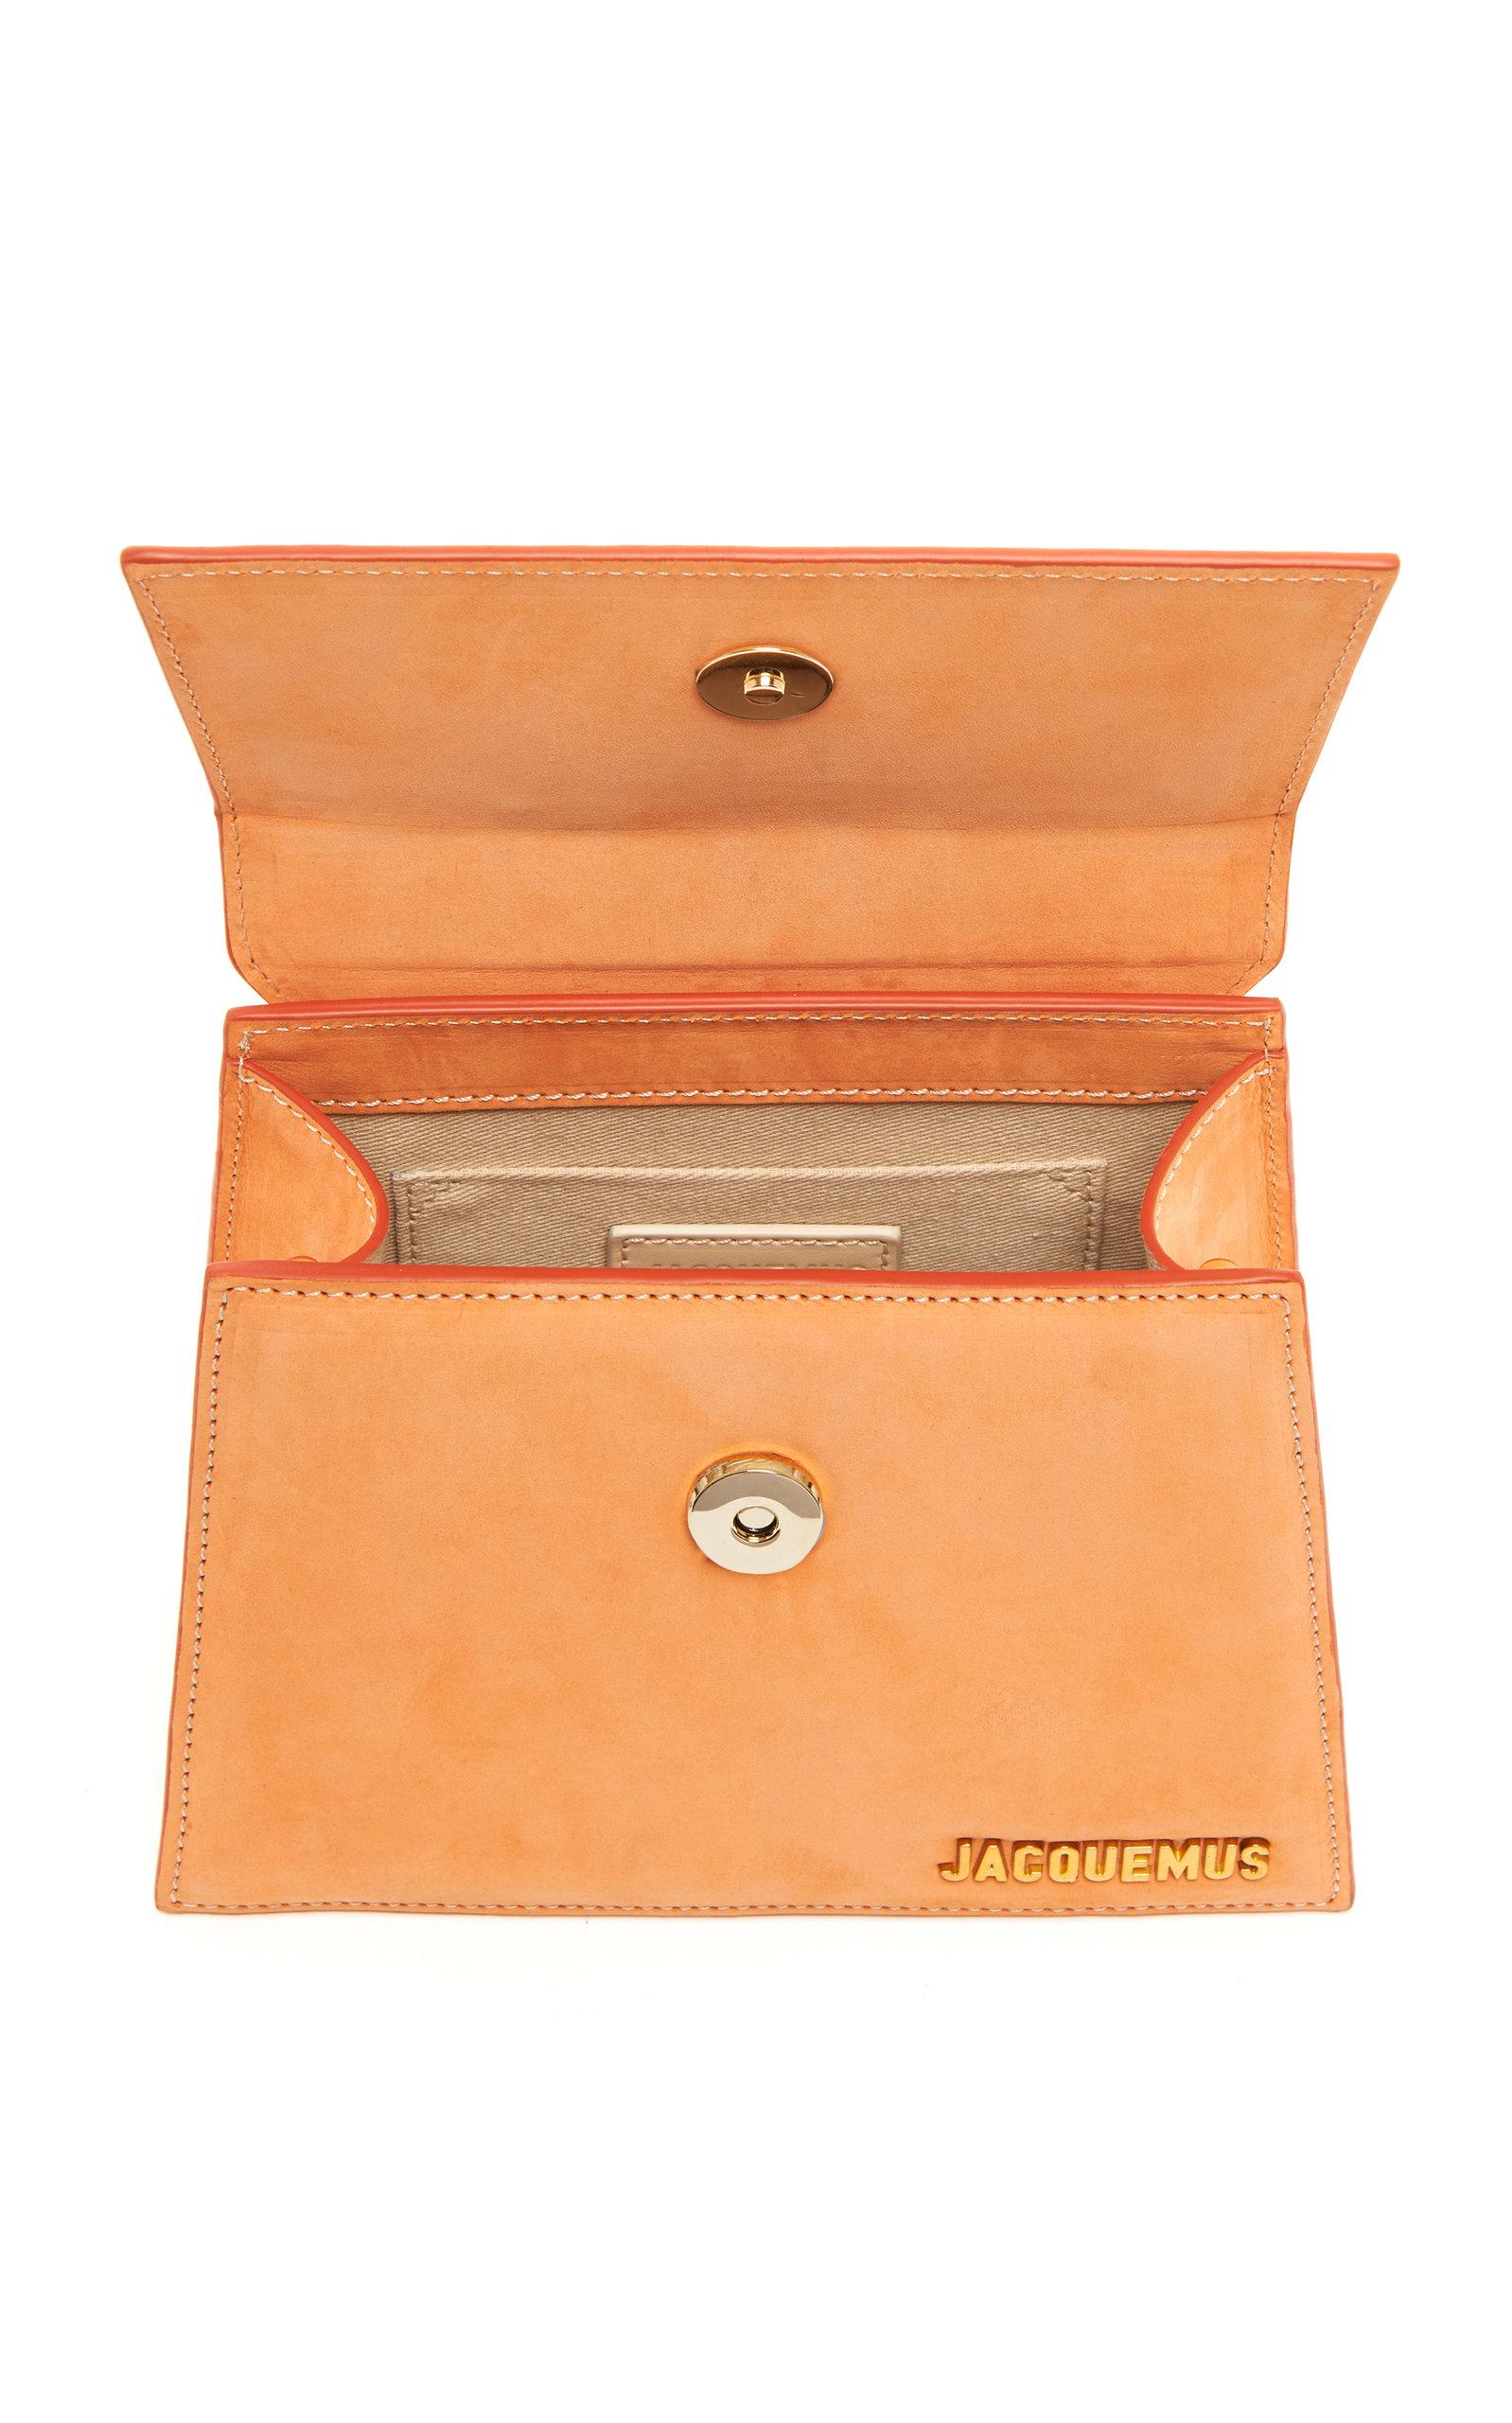 Jacquemus Le Chiquito Noeud Leather Bag in Orange | Lyst